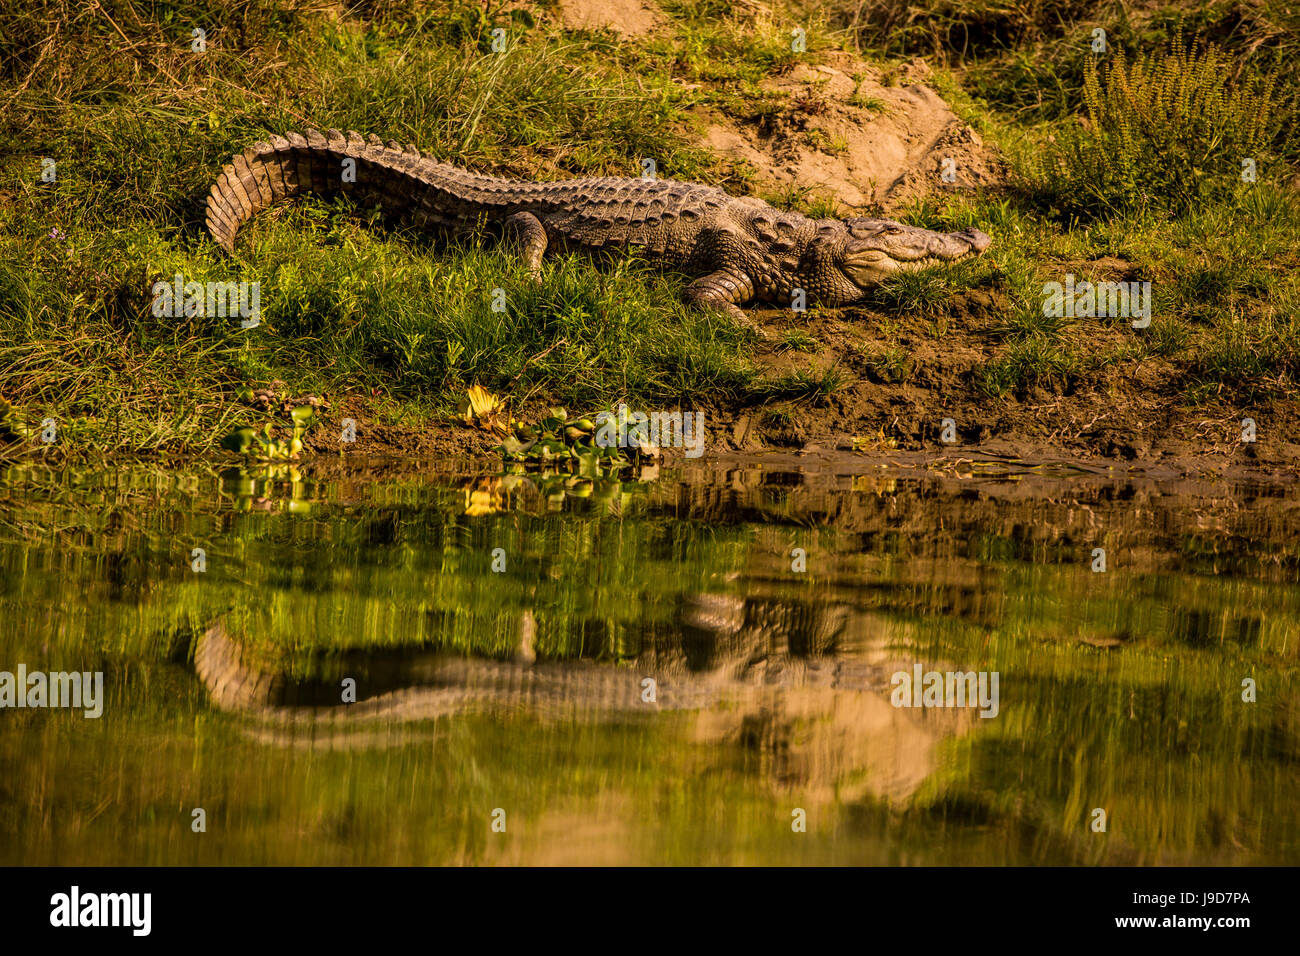 Crocodile sunning himself by a river, Chitwan Elephant Sanctuary, Nepal, Asia Stock Photo